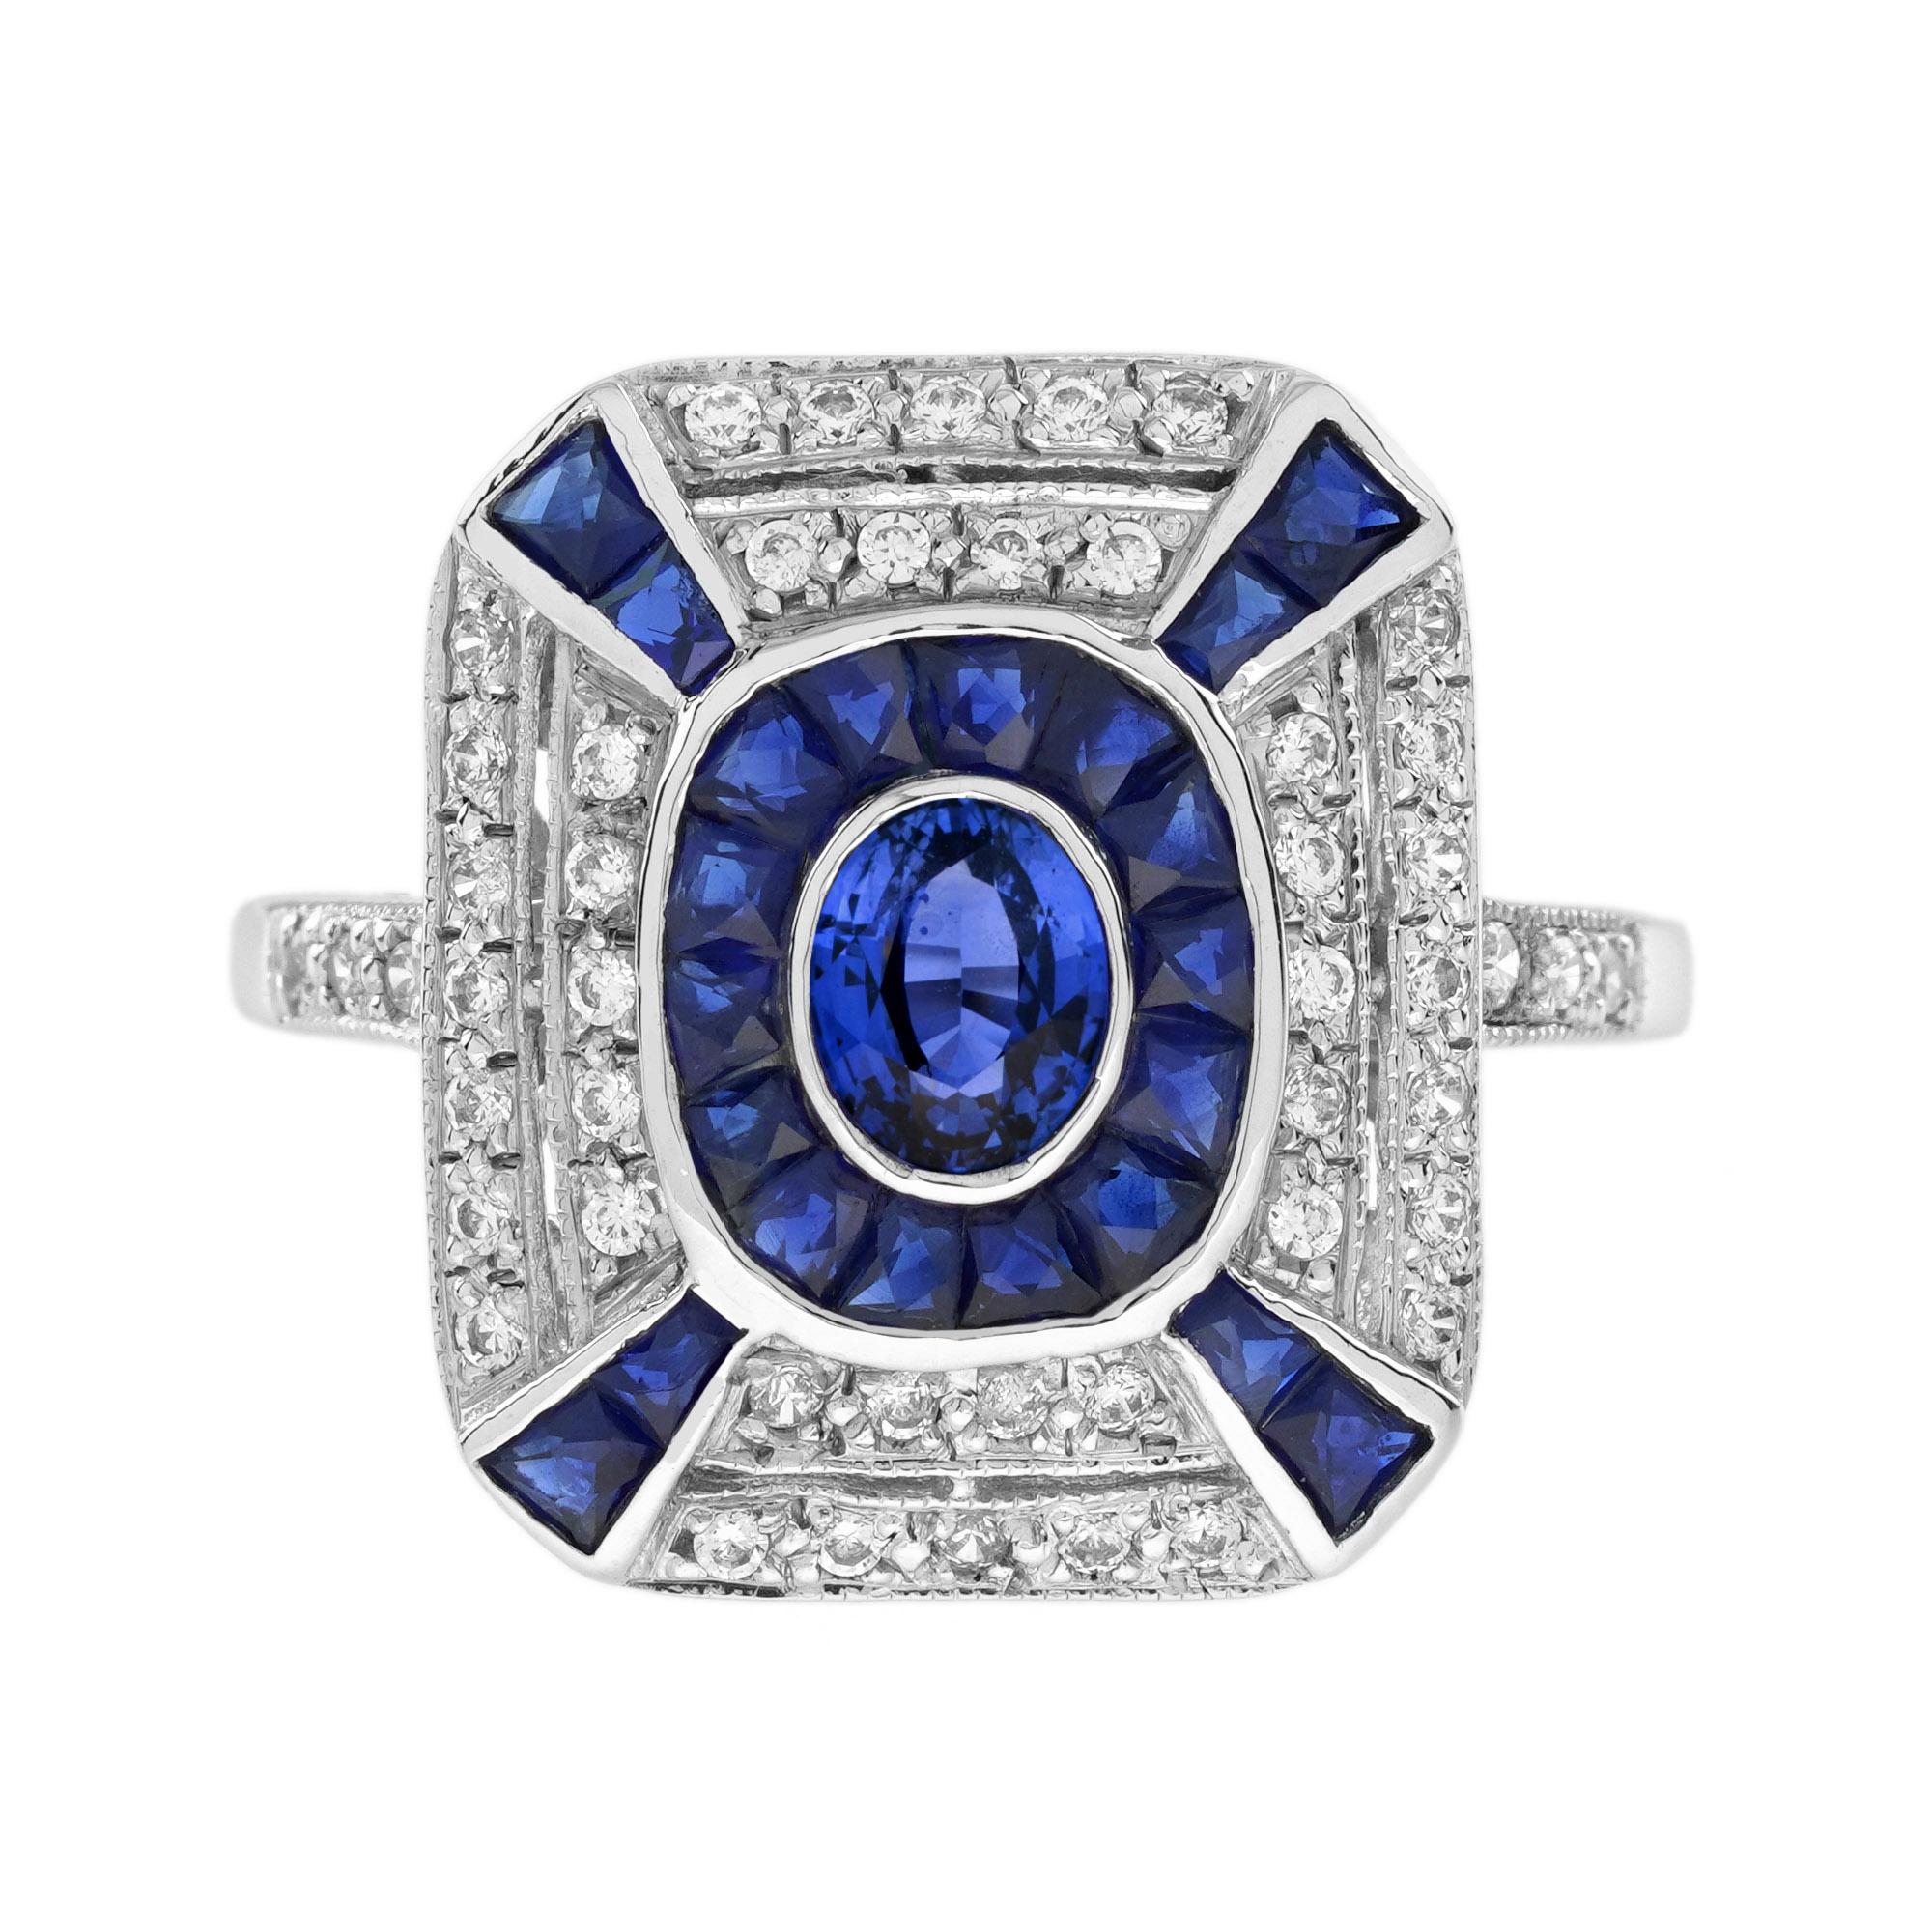 Ceylon Sapphire and Diamond Art Deco Style Halo Ring in 18K White Gold